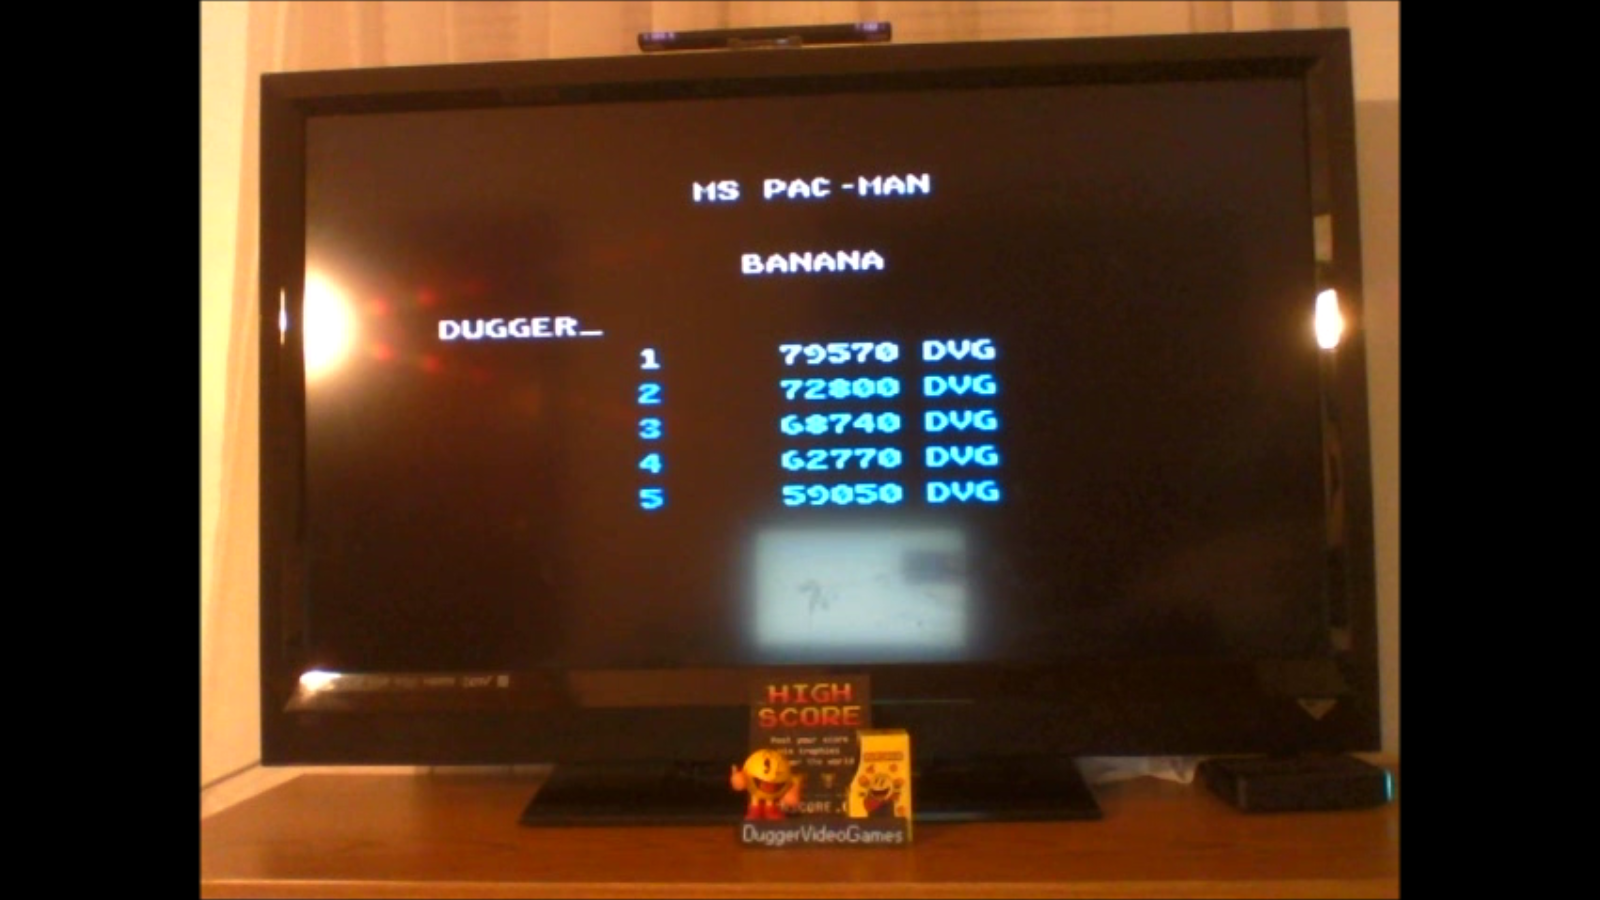 DuggerVideoGames: Ms. Pac-Man: Banana Start (Atari 7800 Emulated) 79,570 points on 2016-12-21 16:34:28